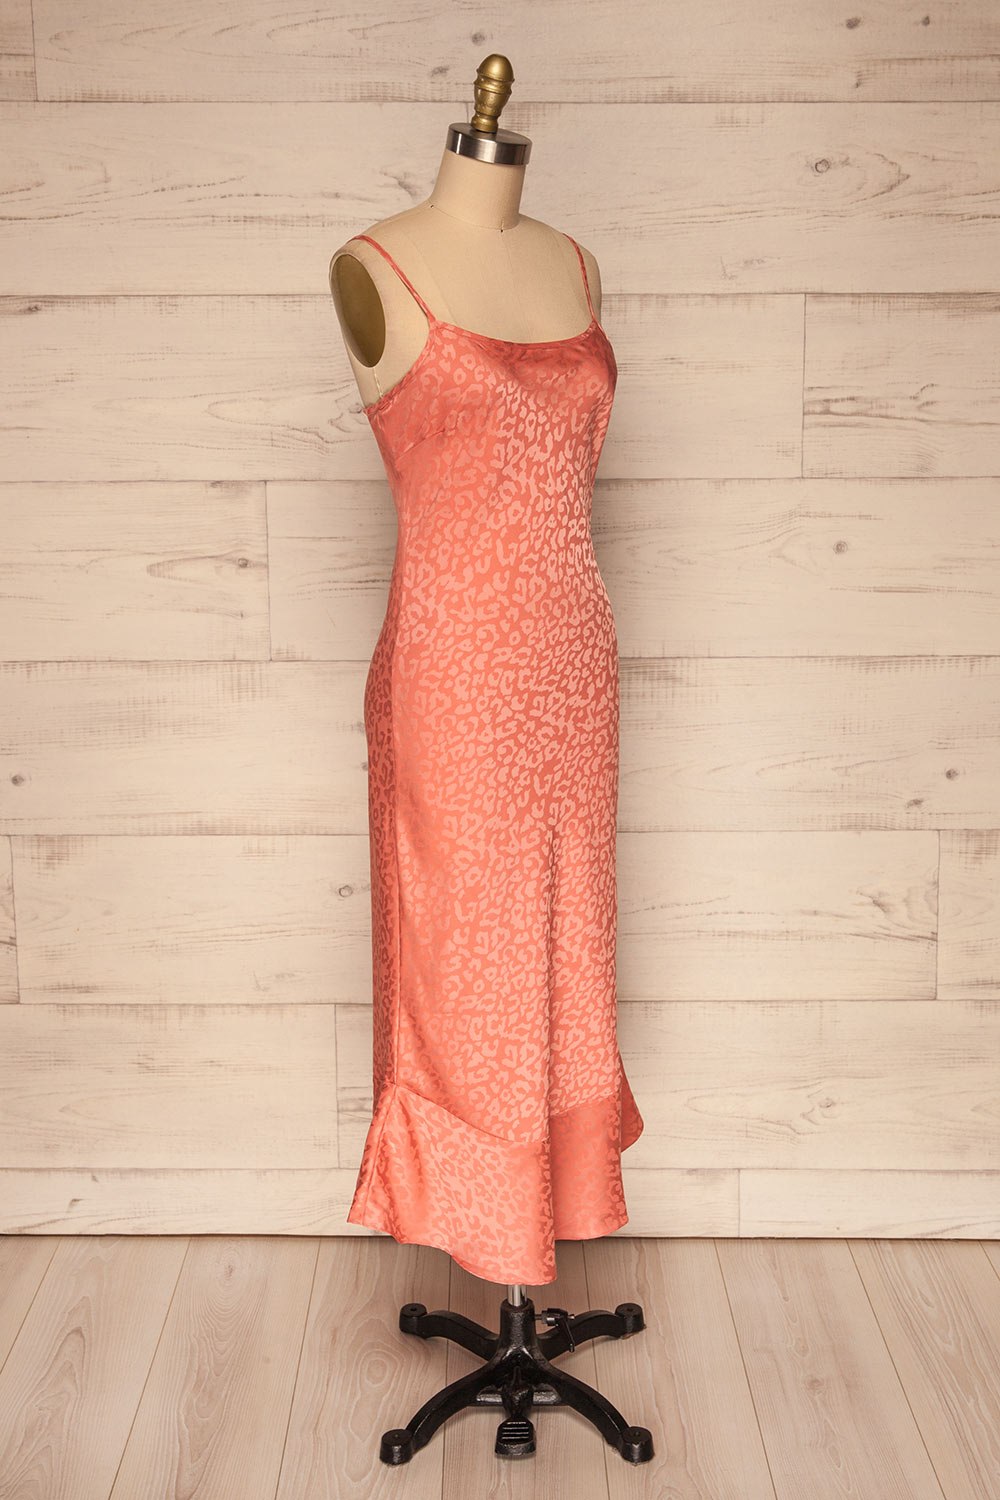 Seefeld Pêche Pink Leopard Print Slip Dress side view | La Petite Garçonne